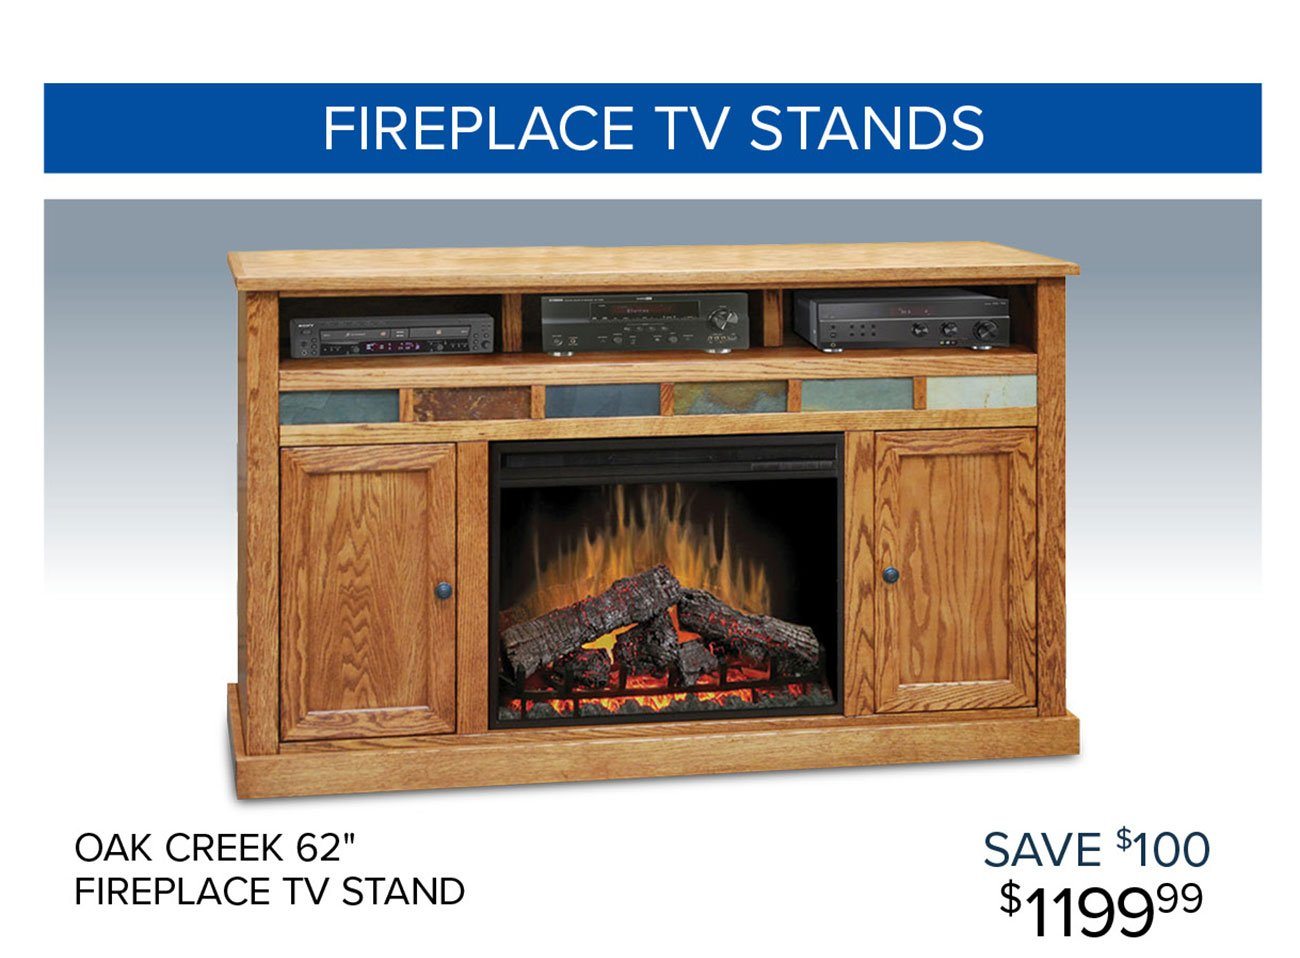 Oak-creek-Fireplace-TV-stand